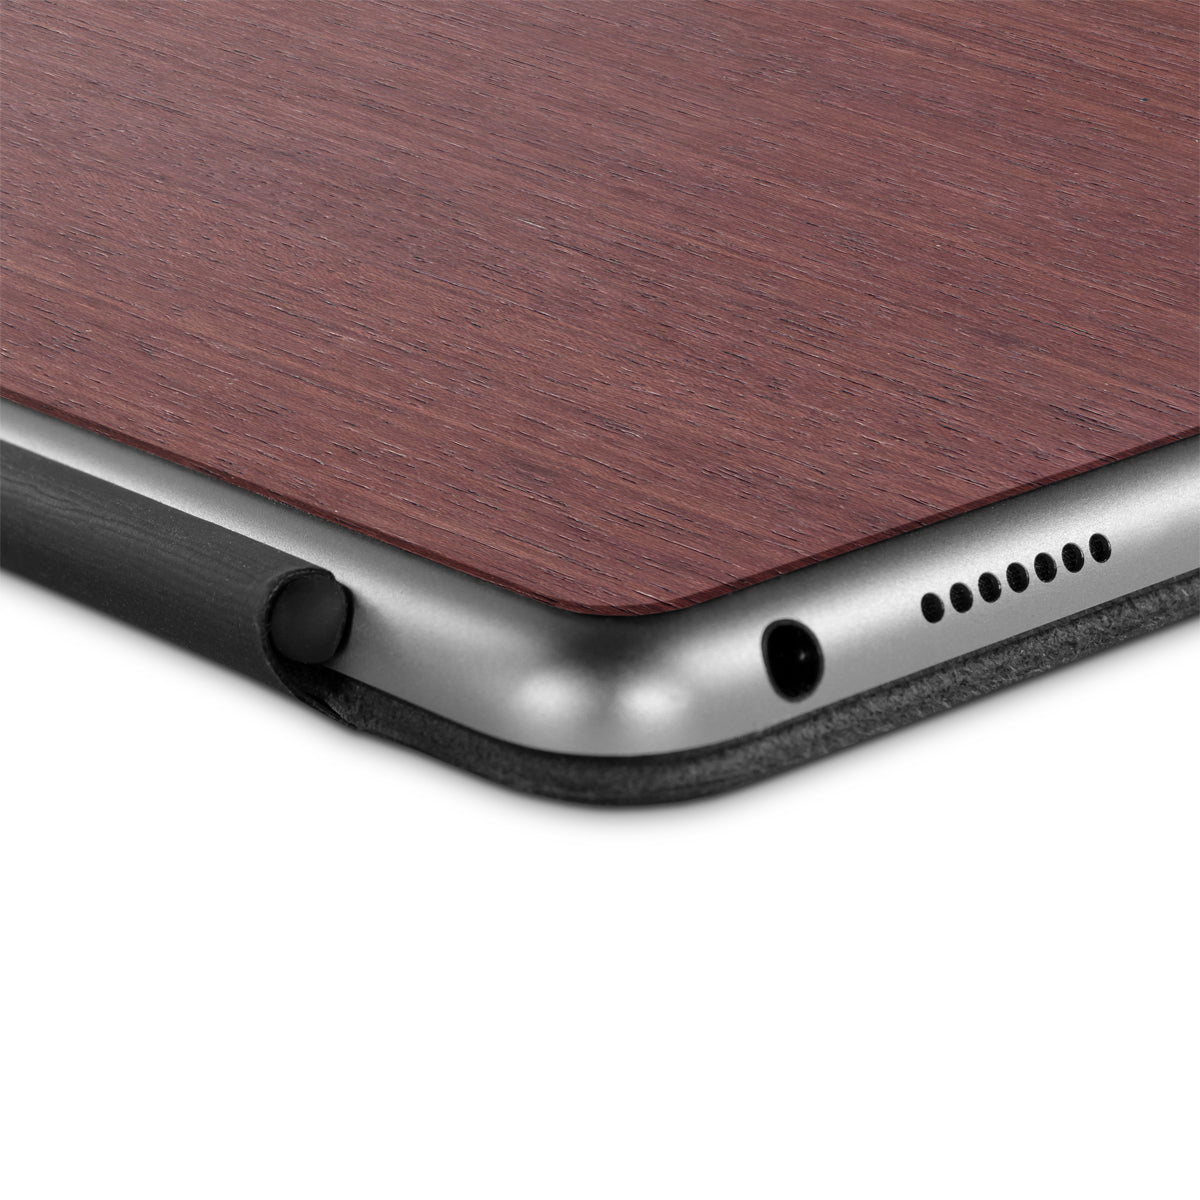 iPad 9.7-inch (2018) 6th Gen — #WoodBack Skin